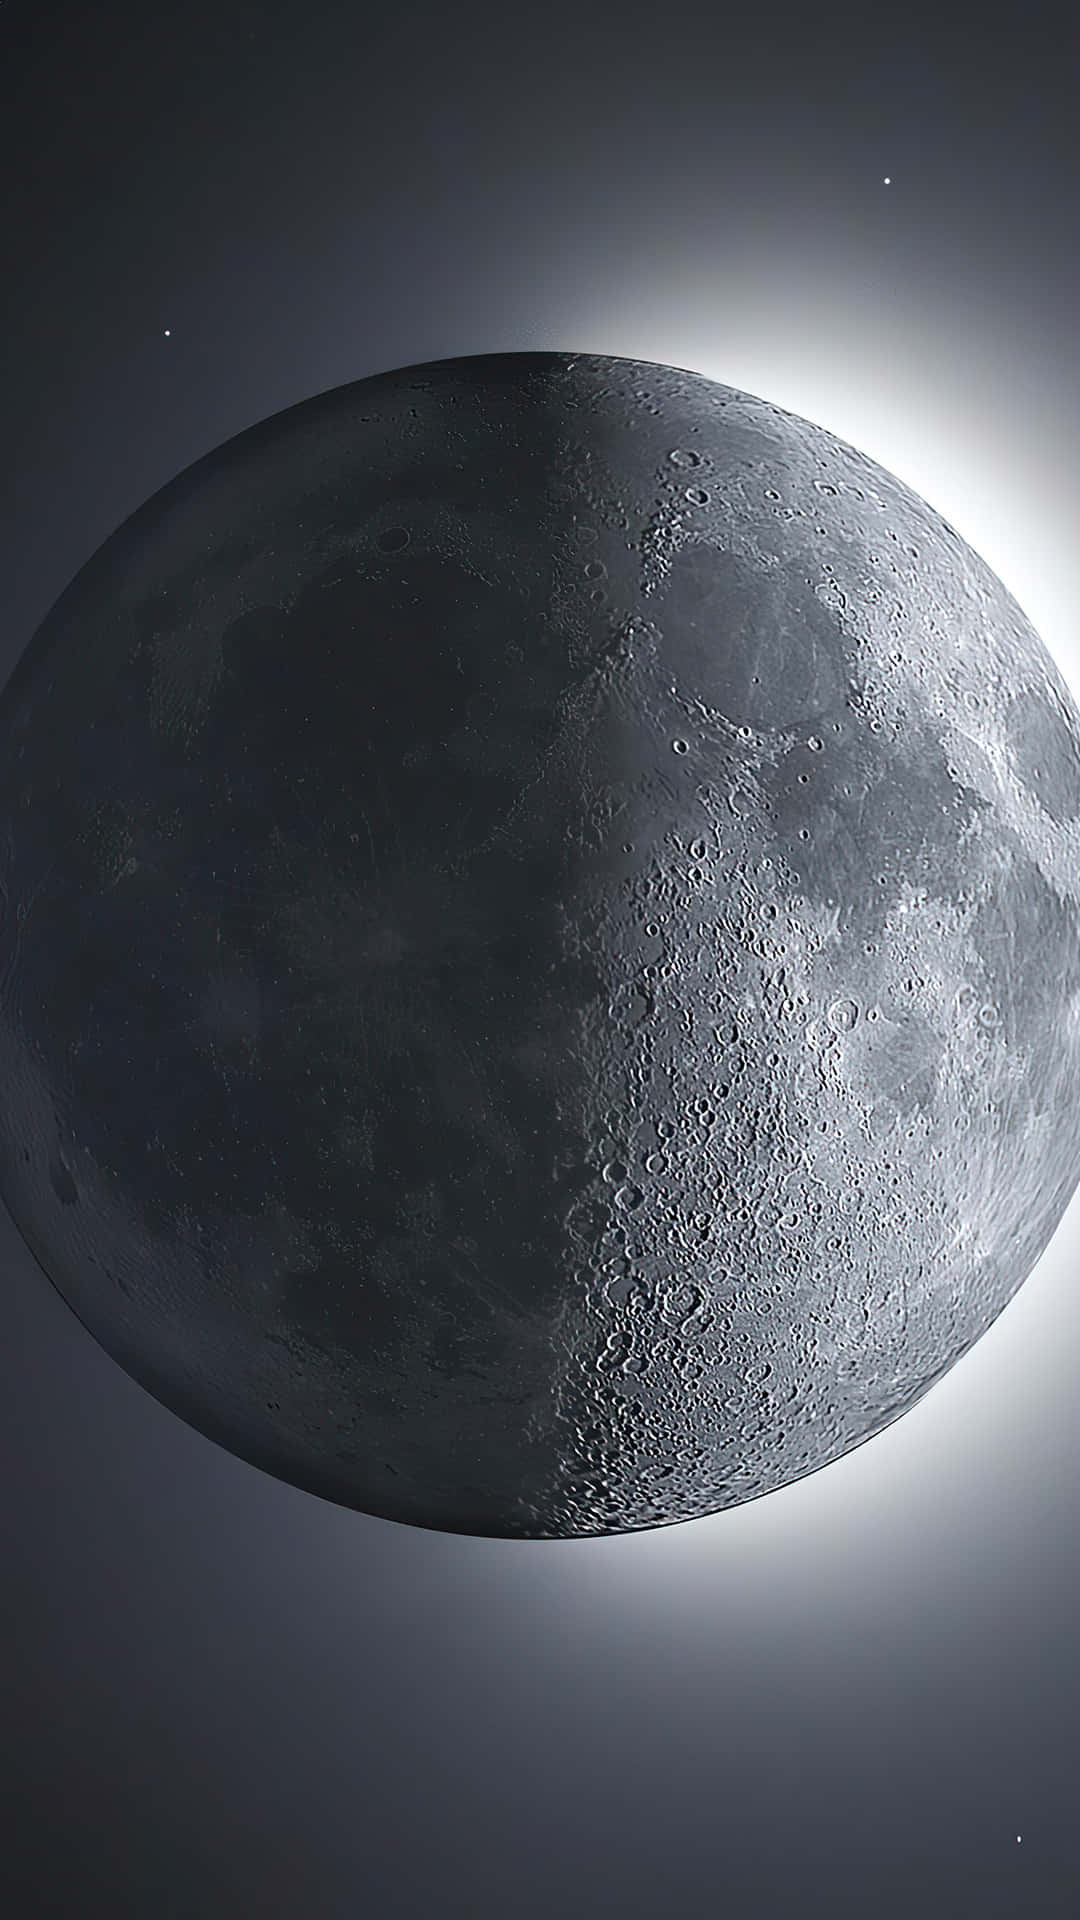 Majestic Full Moon Over Serene Night Sky - iPhone Wallpaper Wallpaper